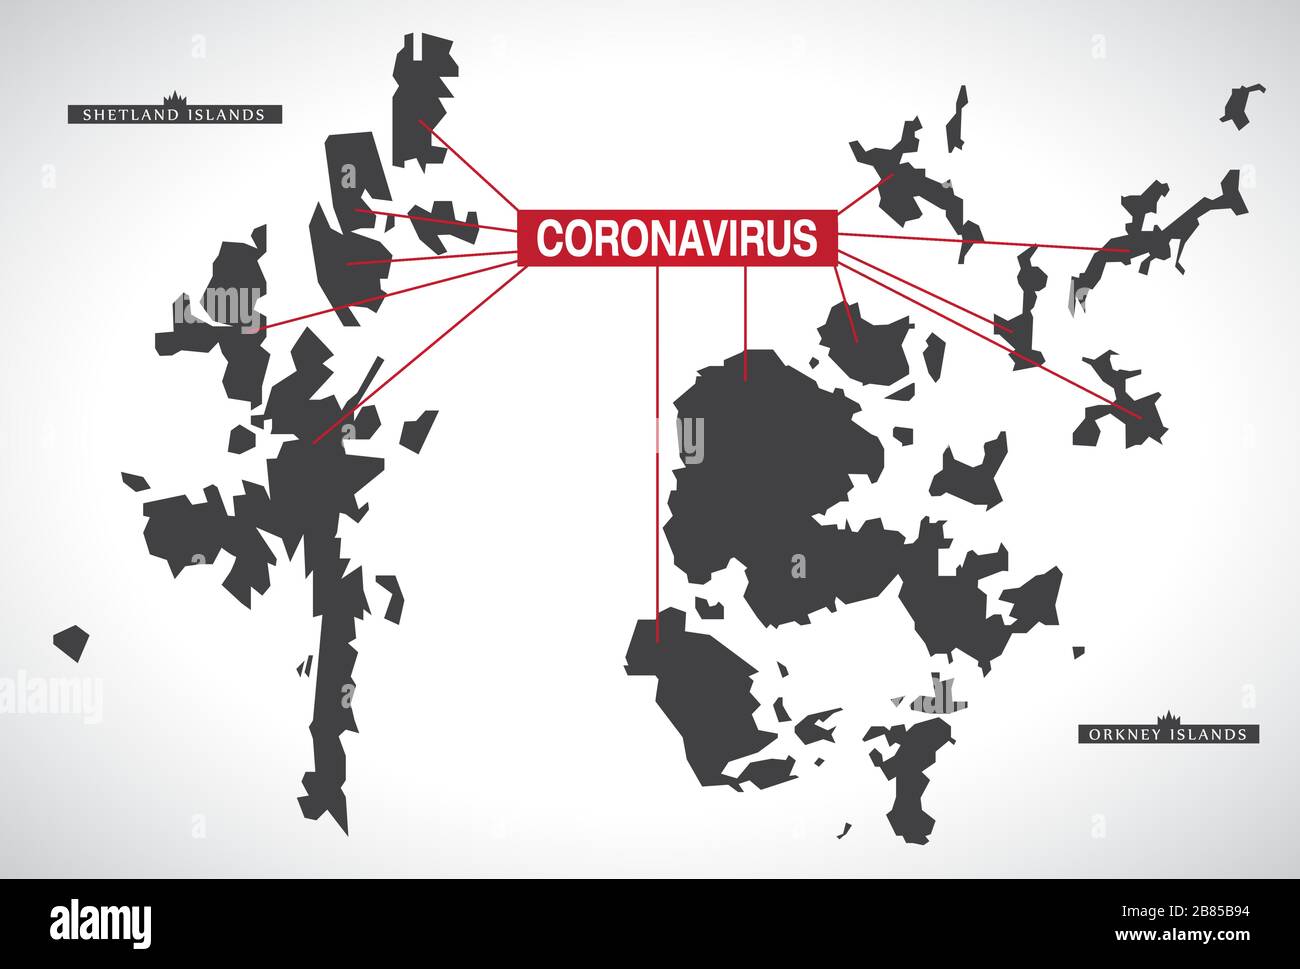 Northern Isles SCOTLAND UK region map with Coronavirus warning illustration Stock Vector